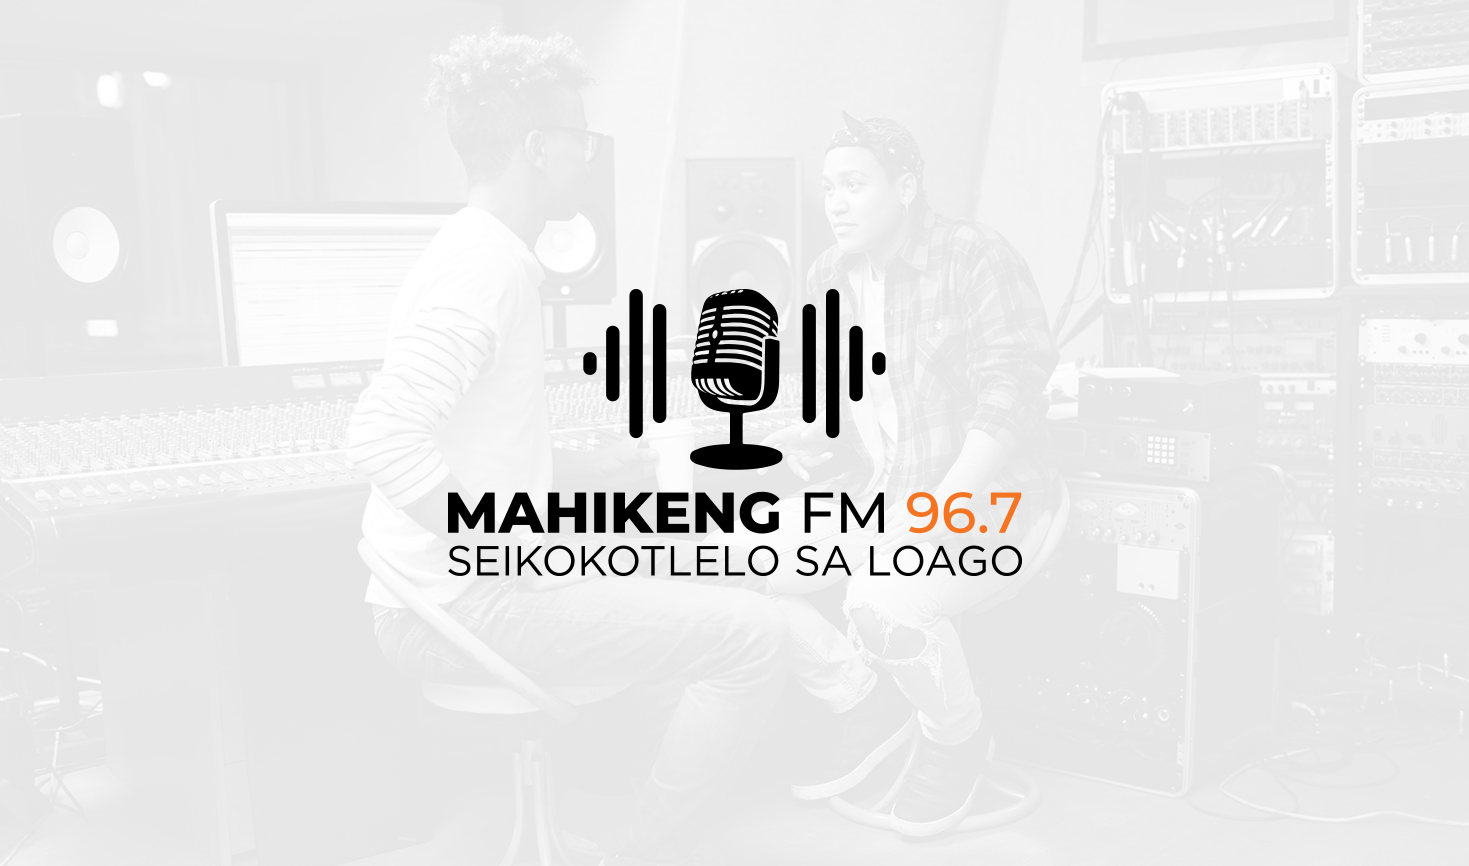 MAHIKENG FM AS A BRAND